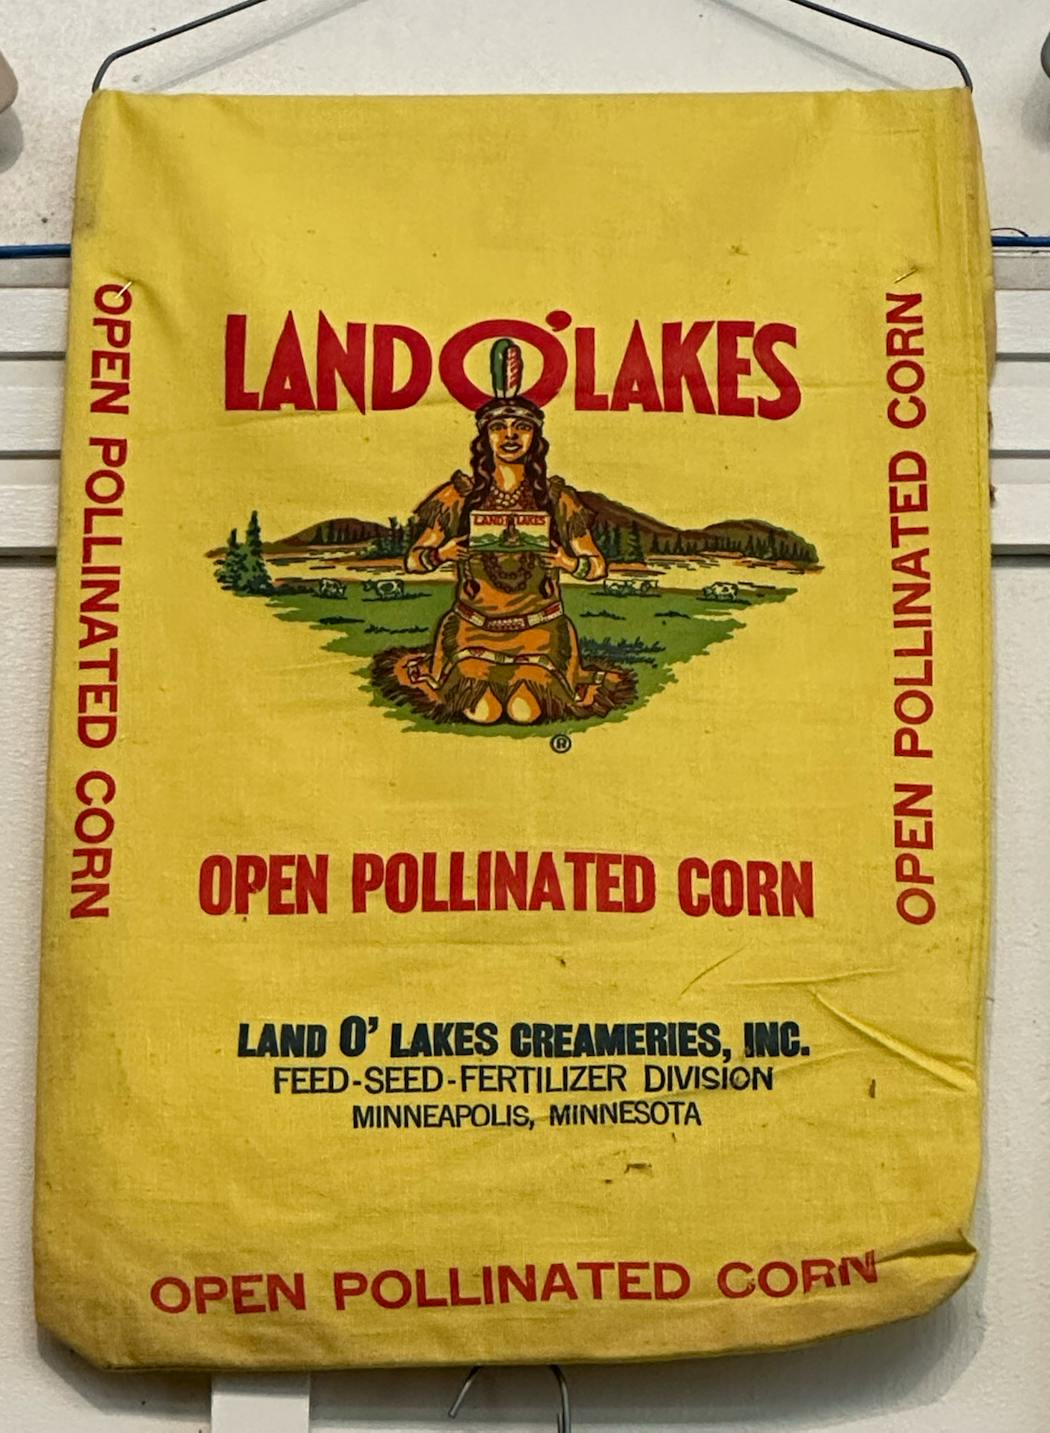 Land O’Lakes Seed Corn Bag, courtesy Ron Kelsey